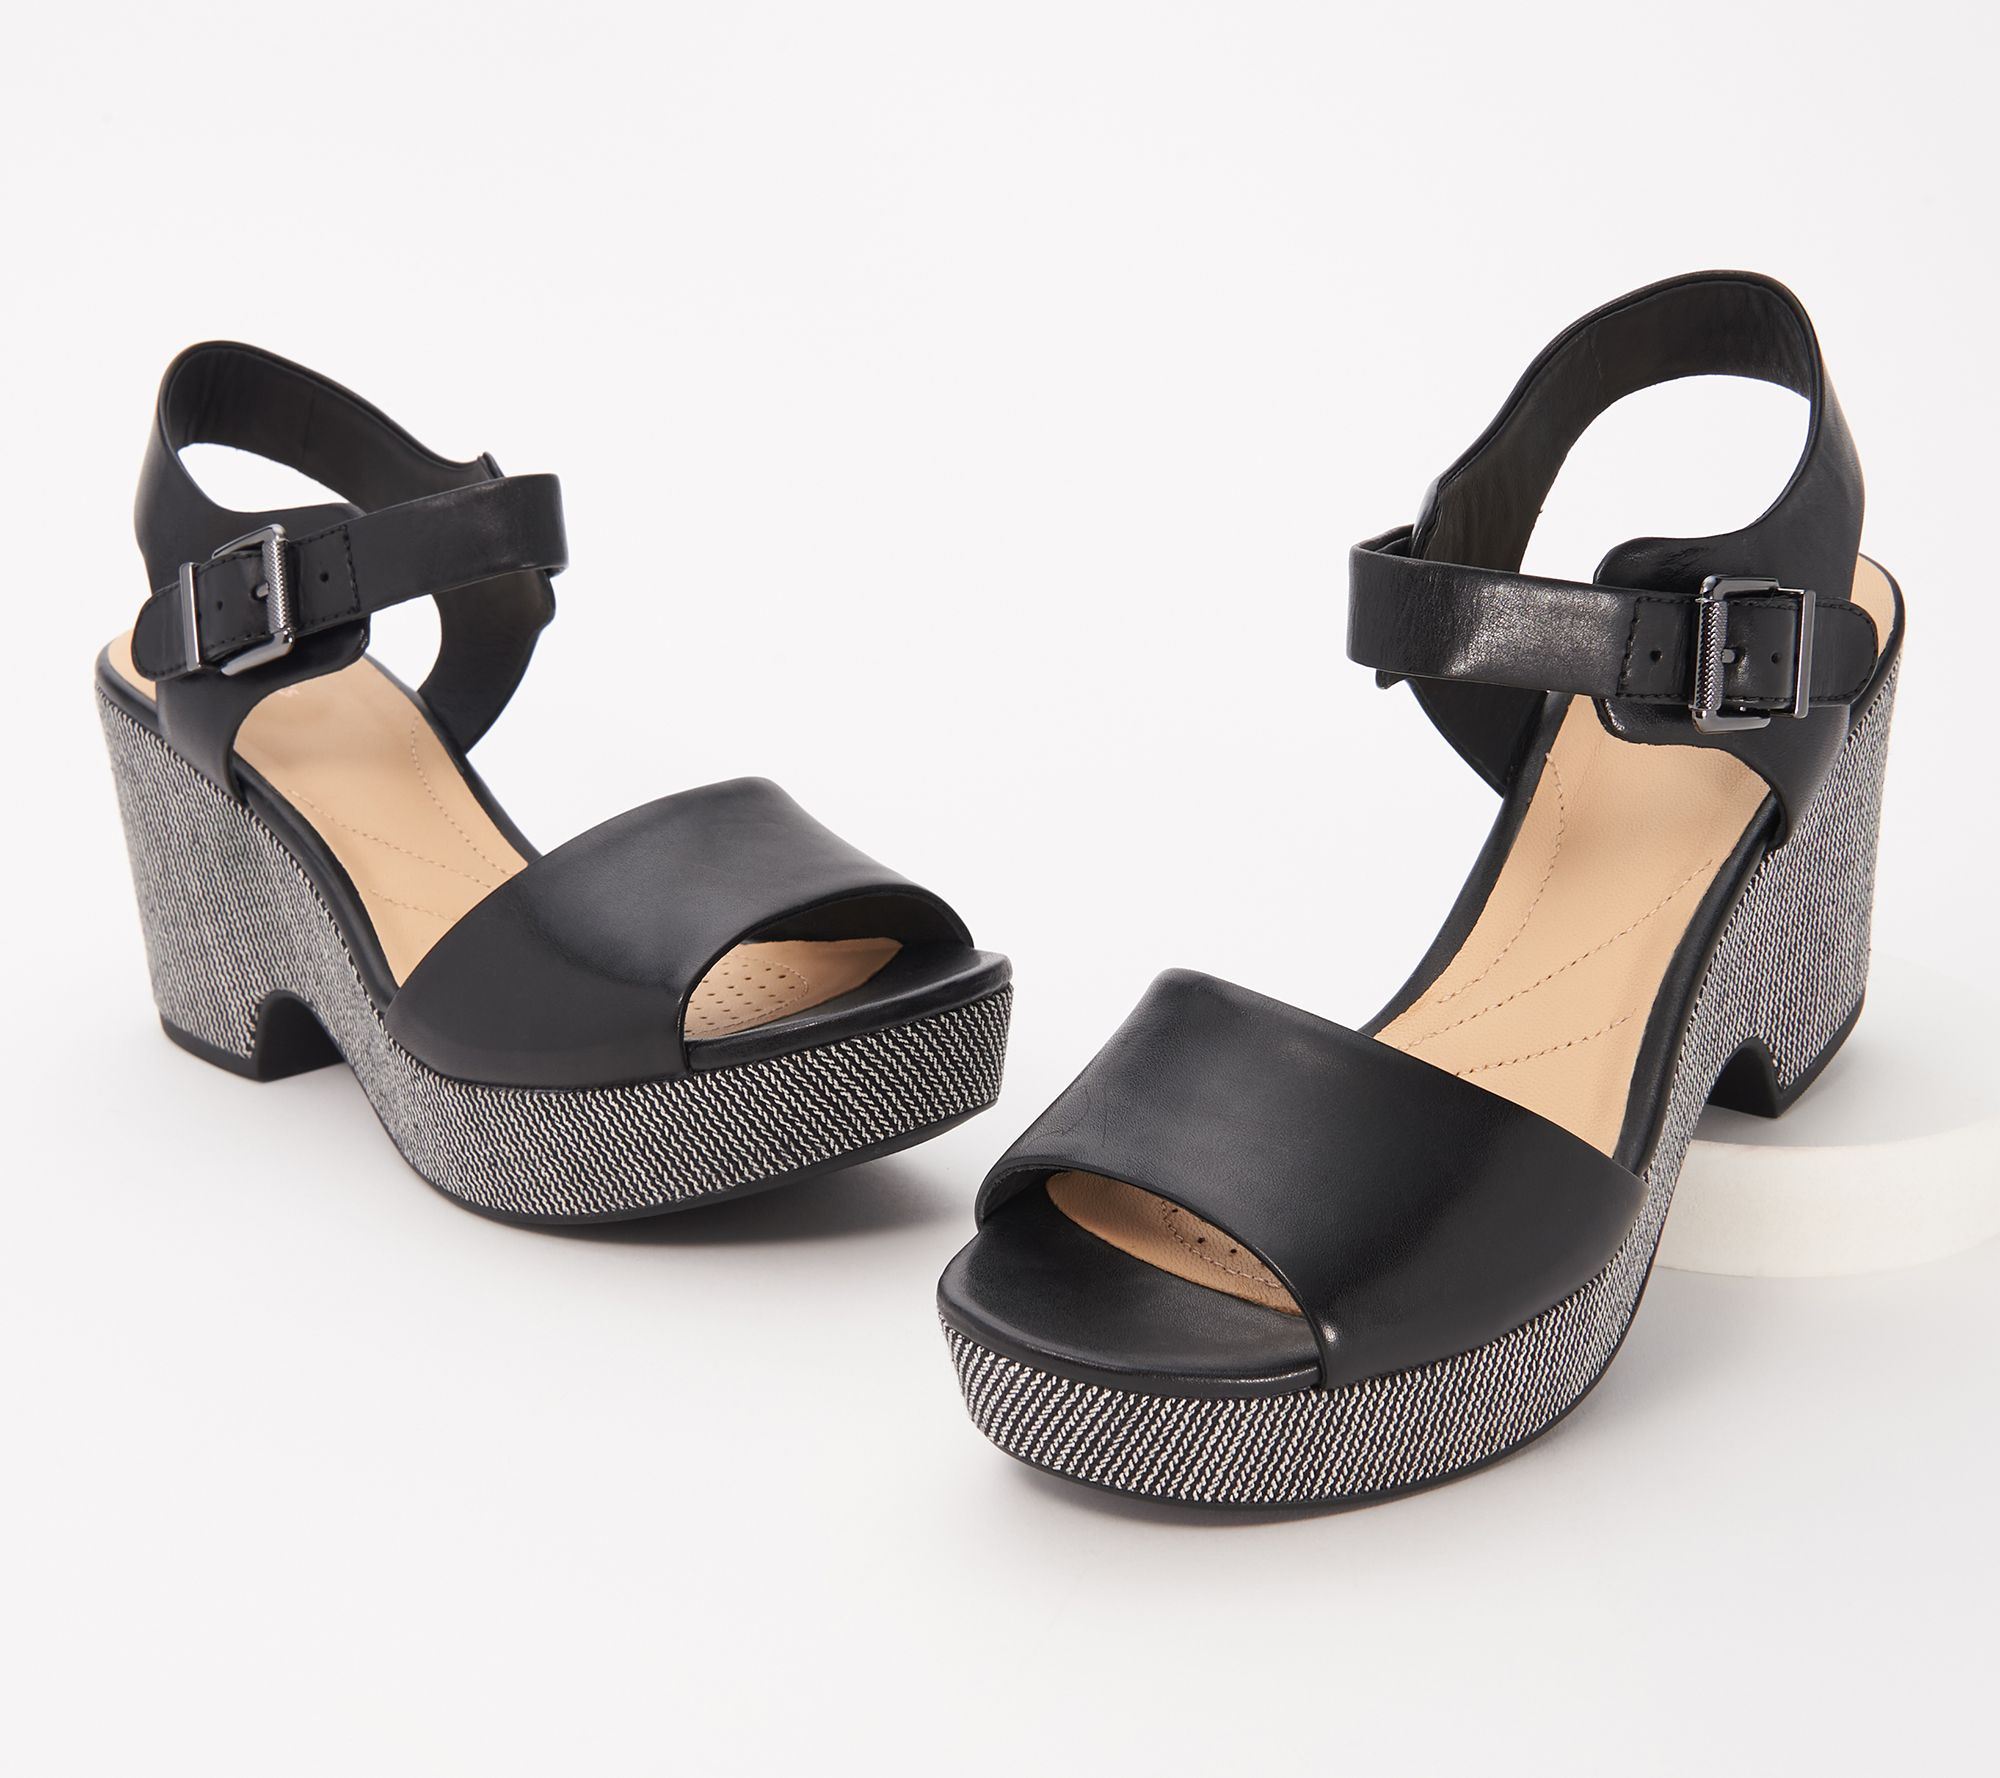 Clarks Leather Wedge Sandals - Maritsa 